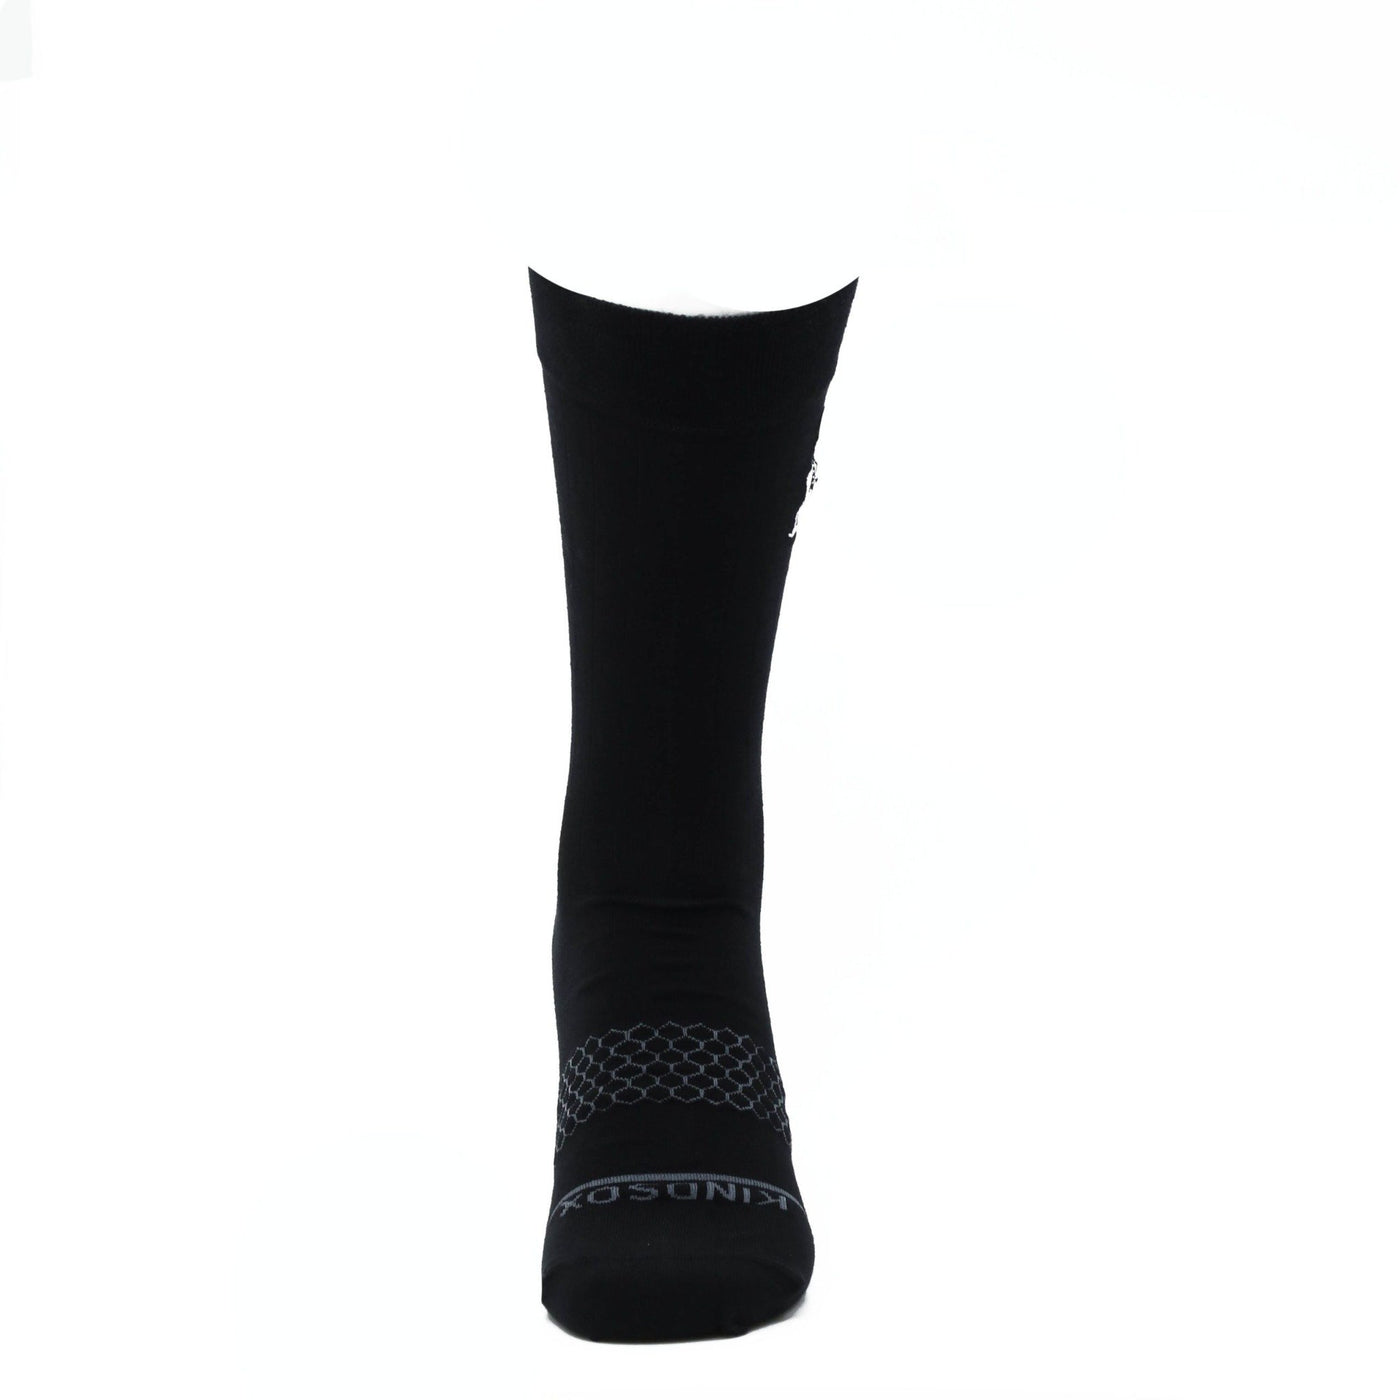 mens premium 200 needle cotton dress socks